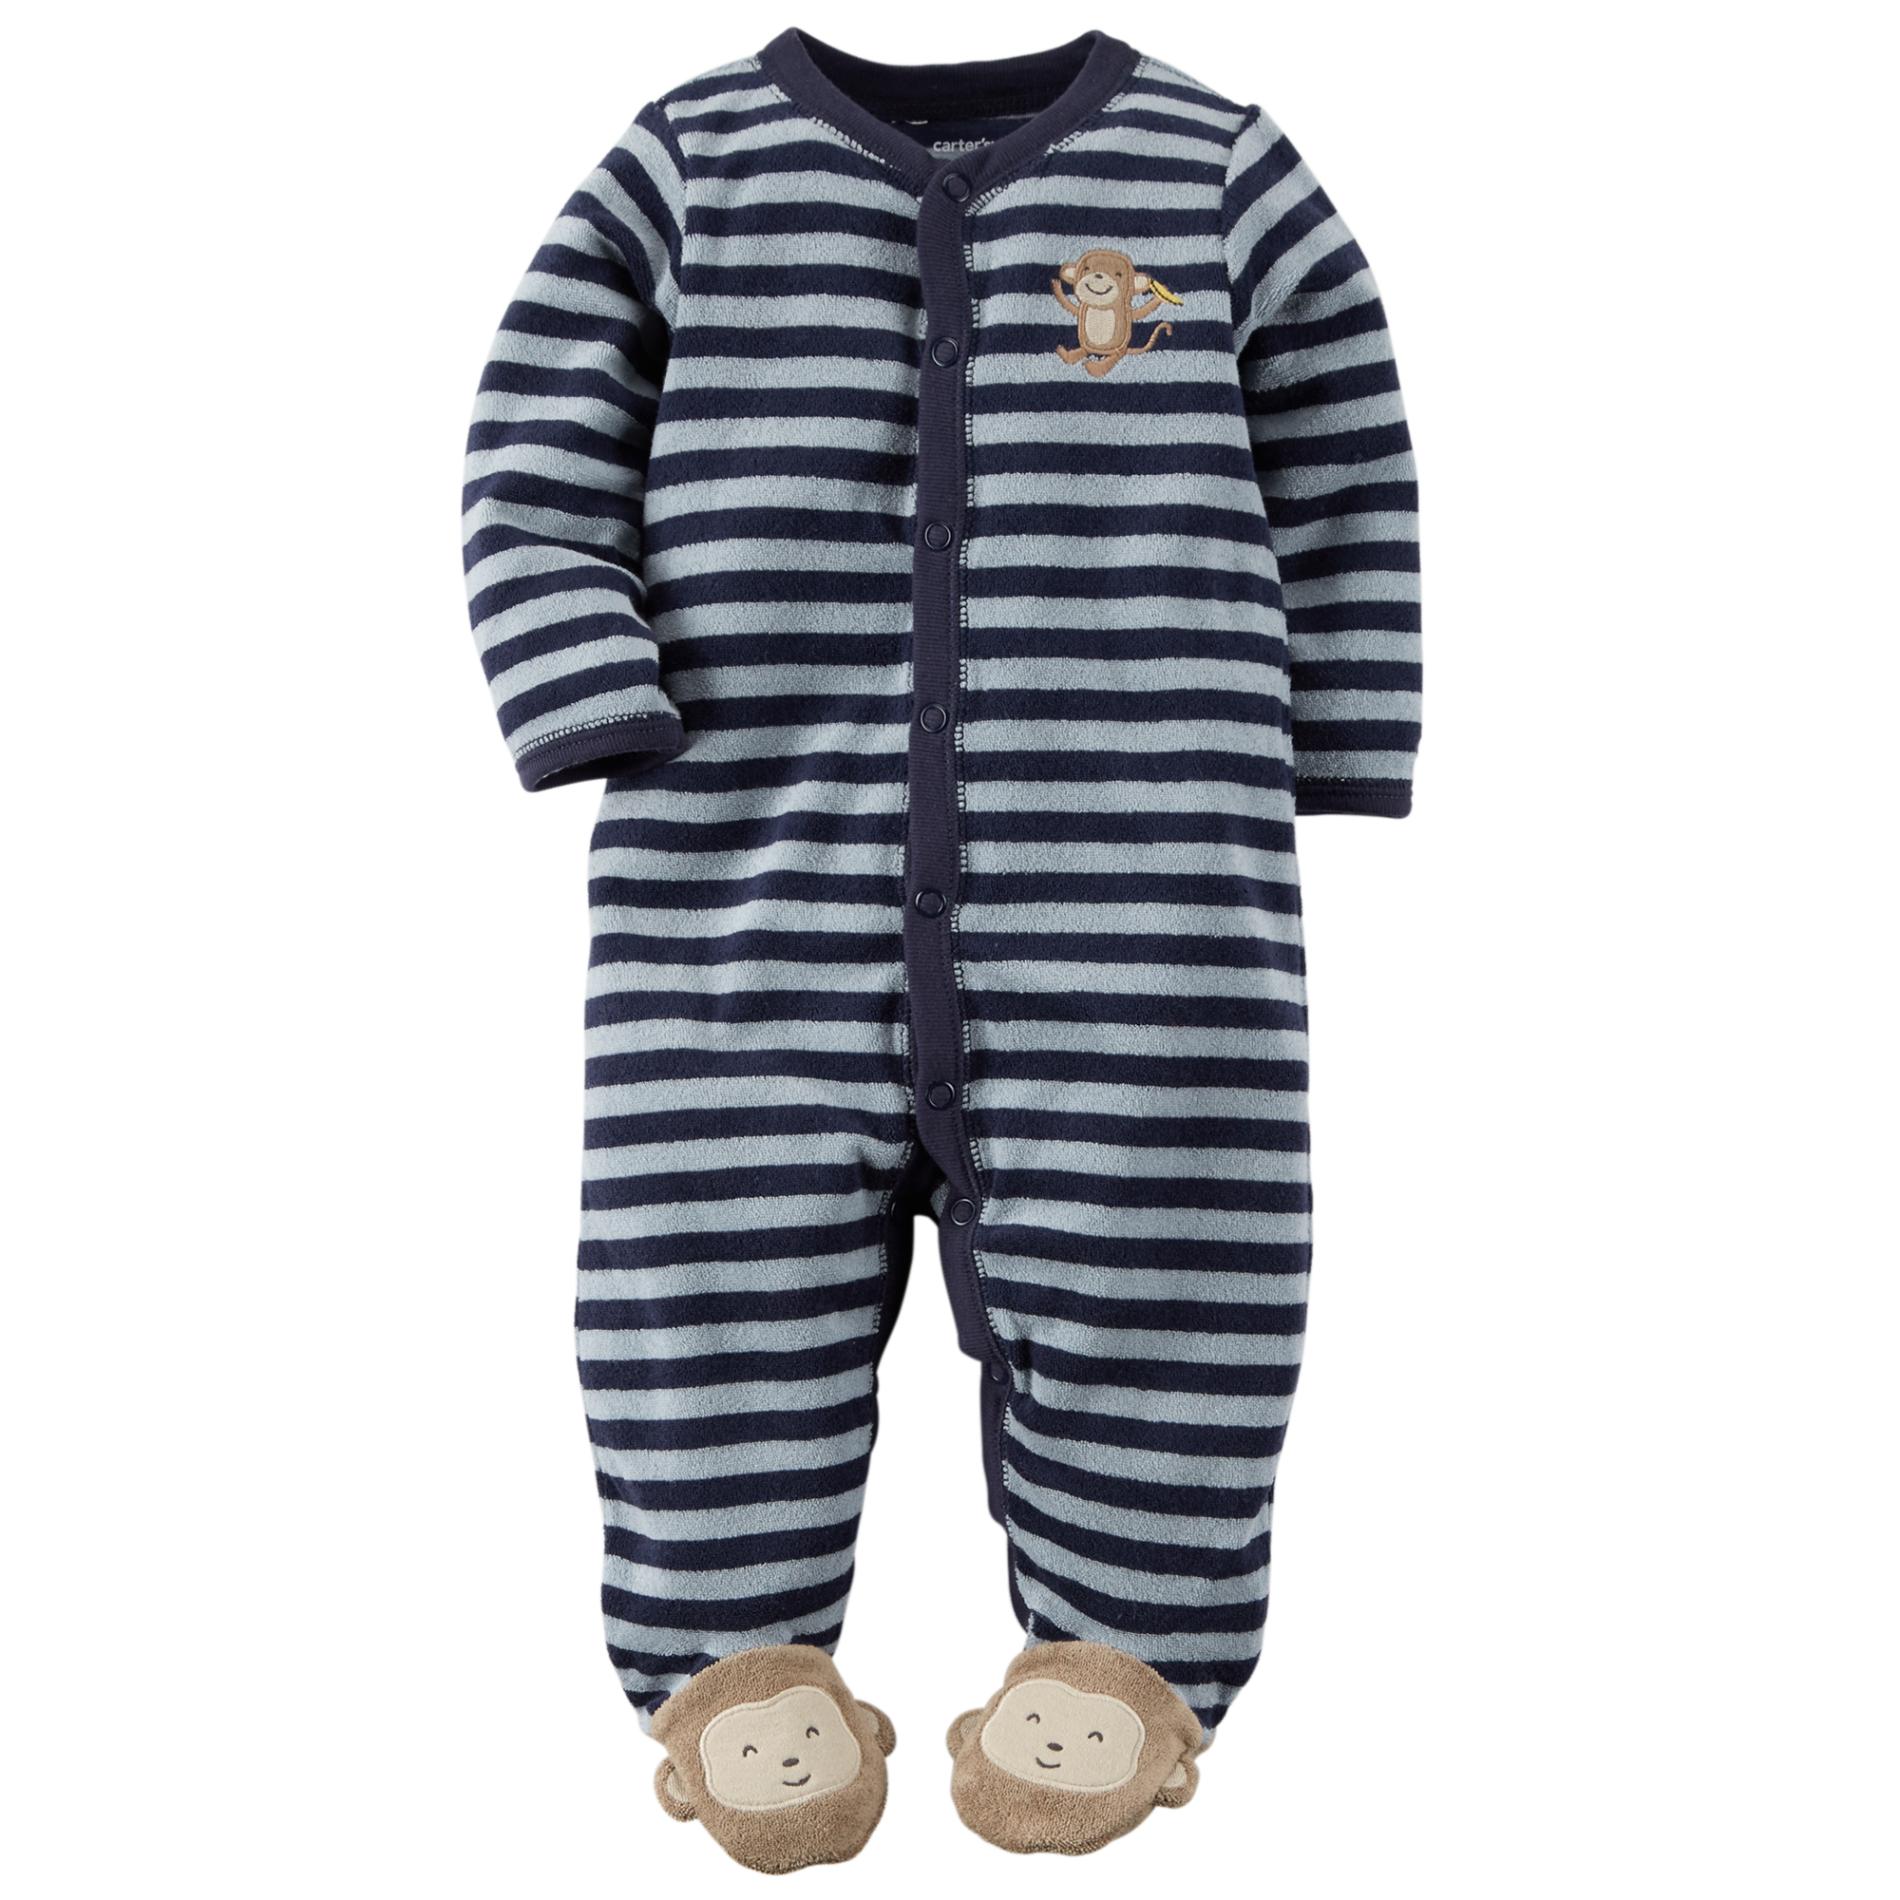 Carter's Newborn Boy's Terry Cloth Sleeper Pajamas - Monkey